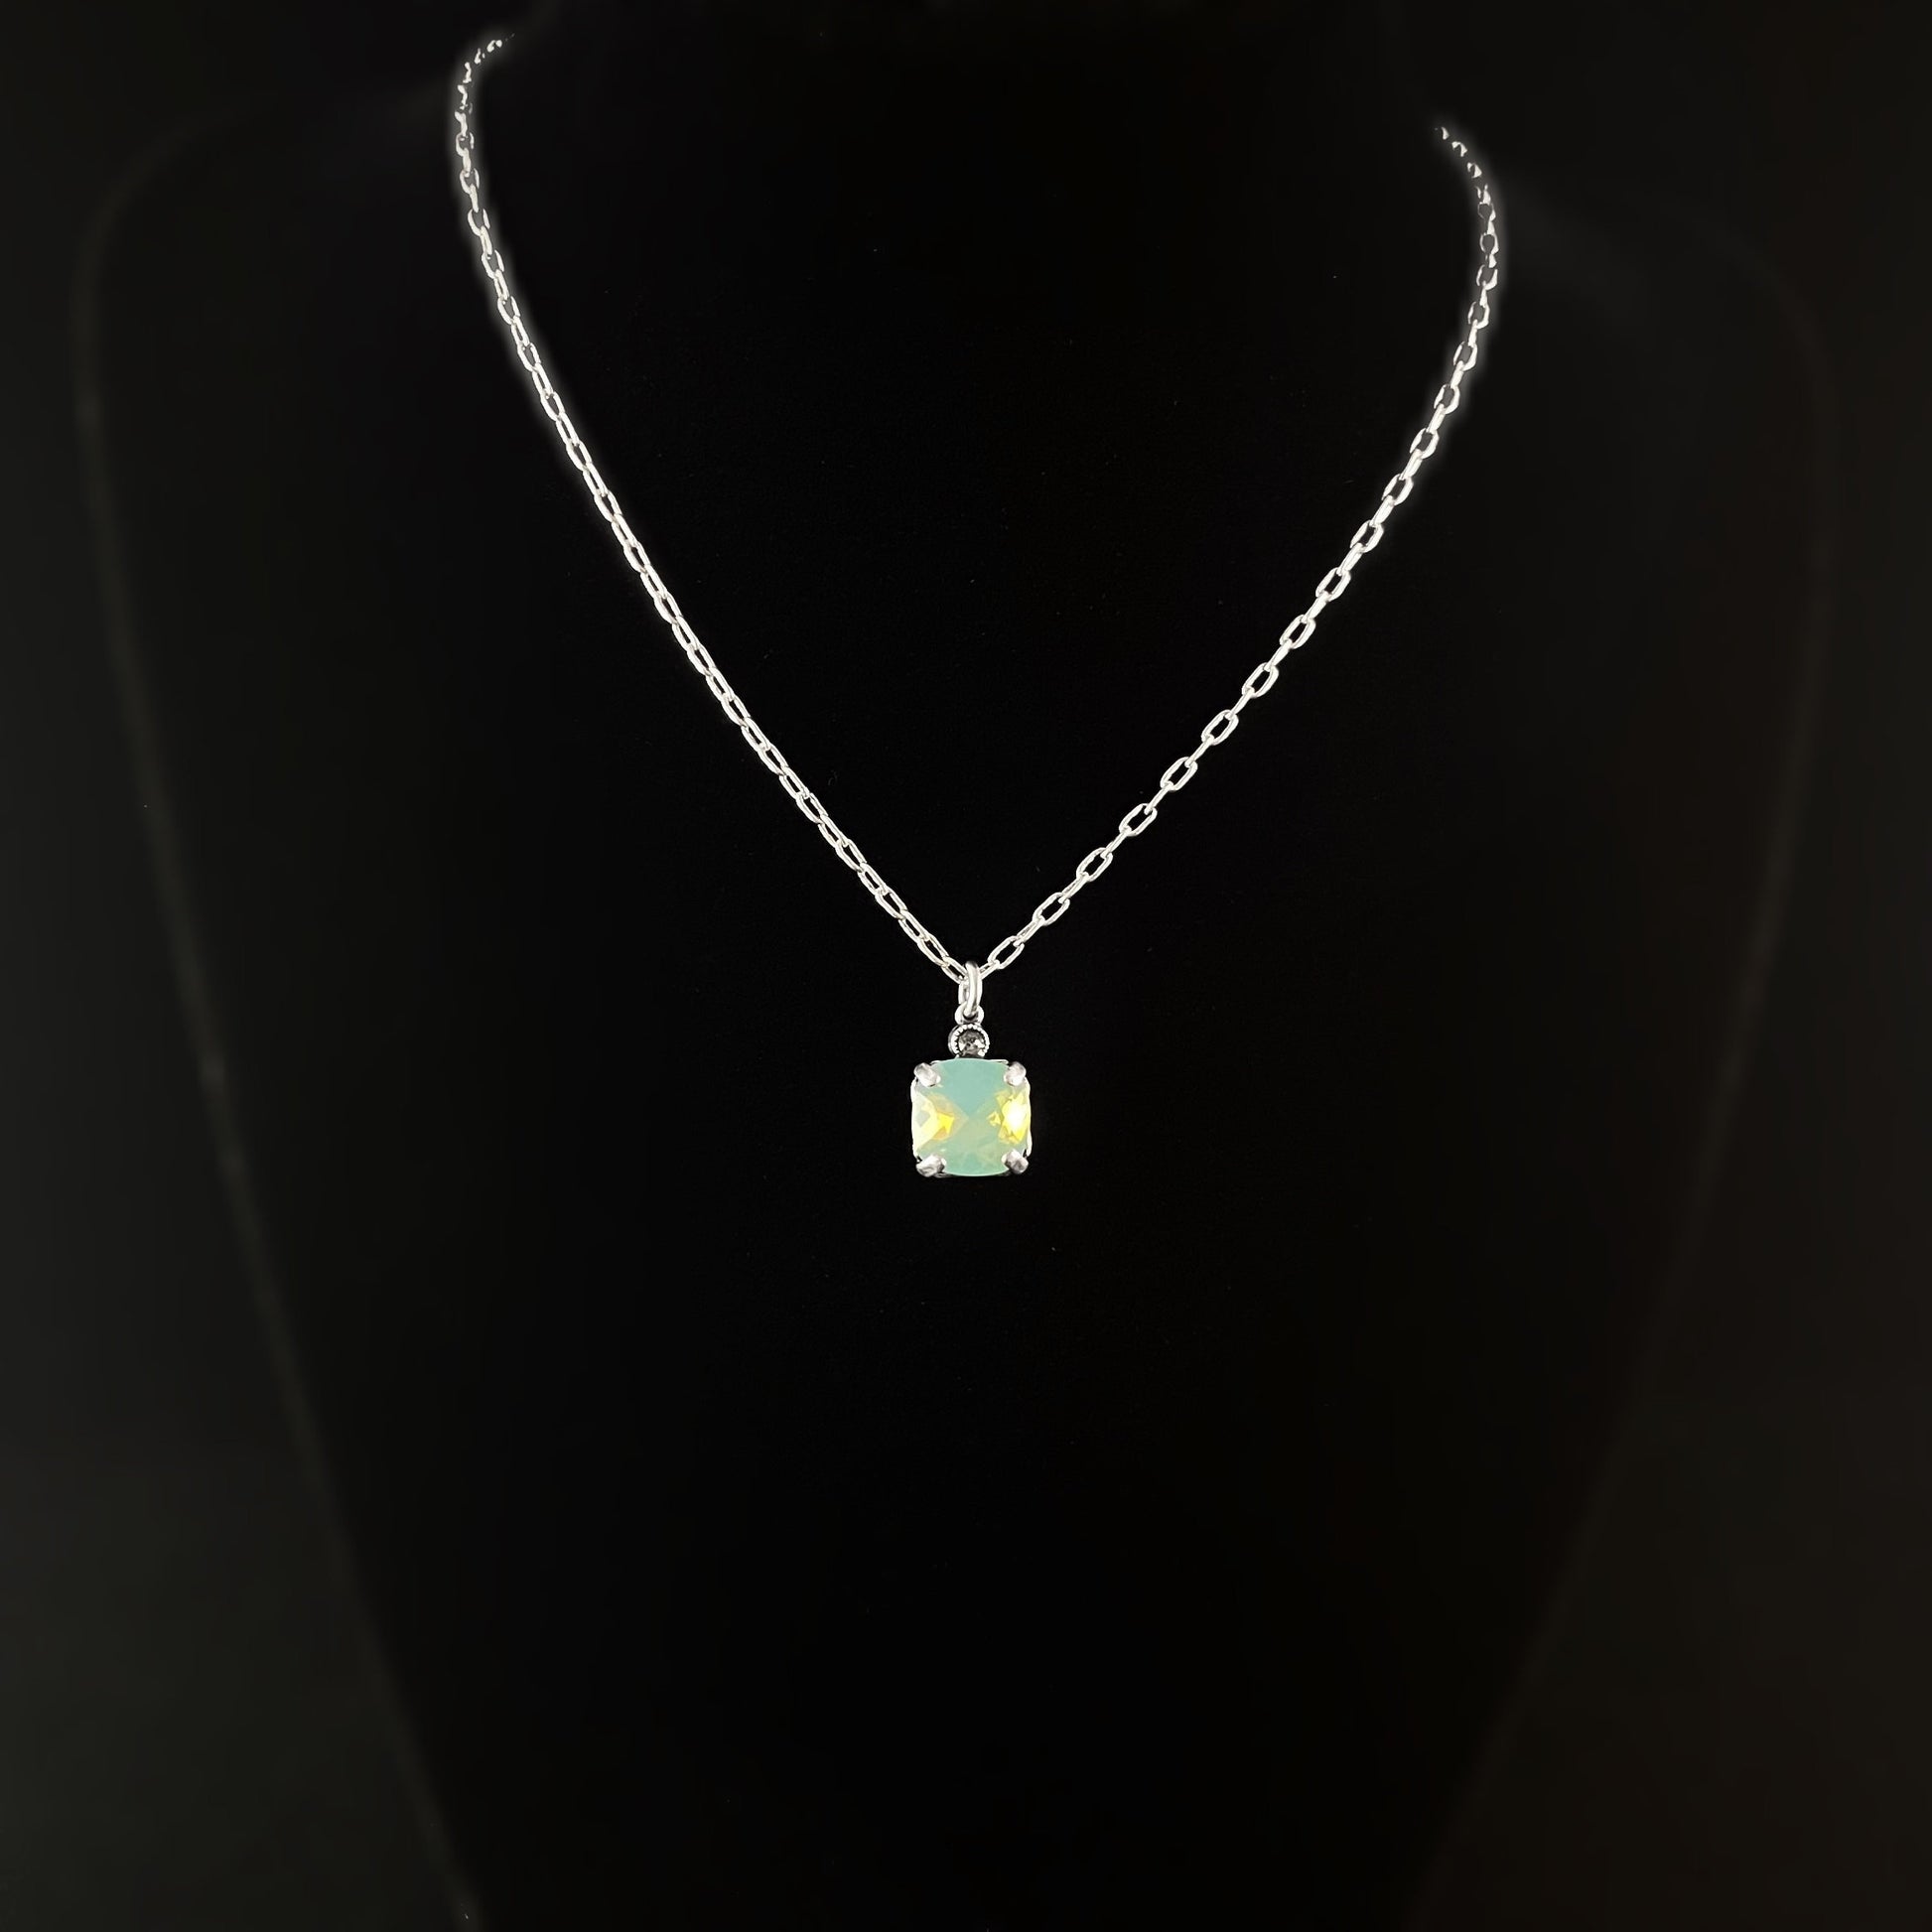 Square Cut Swarovski Crystal Pendant Necklace, Mint Green Opal - La Vie Parisienne by Catherine Popesco